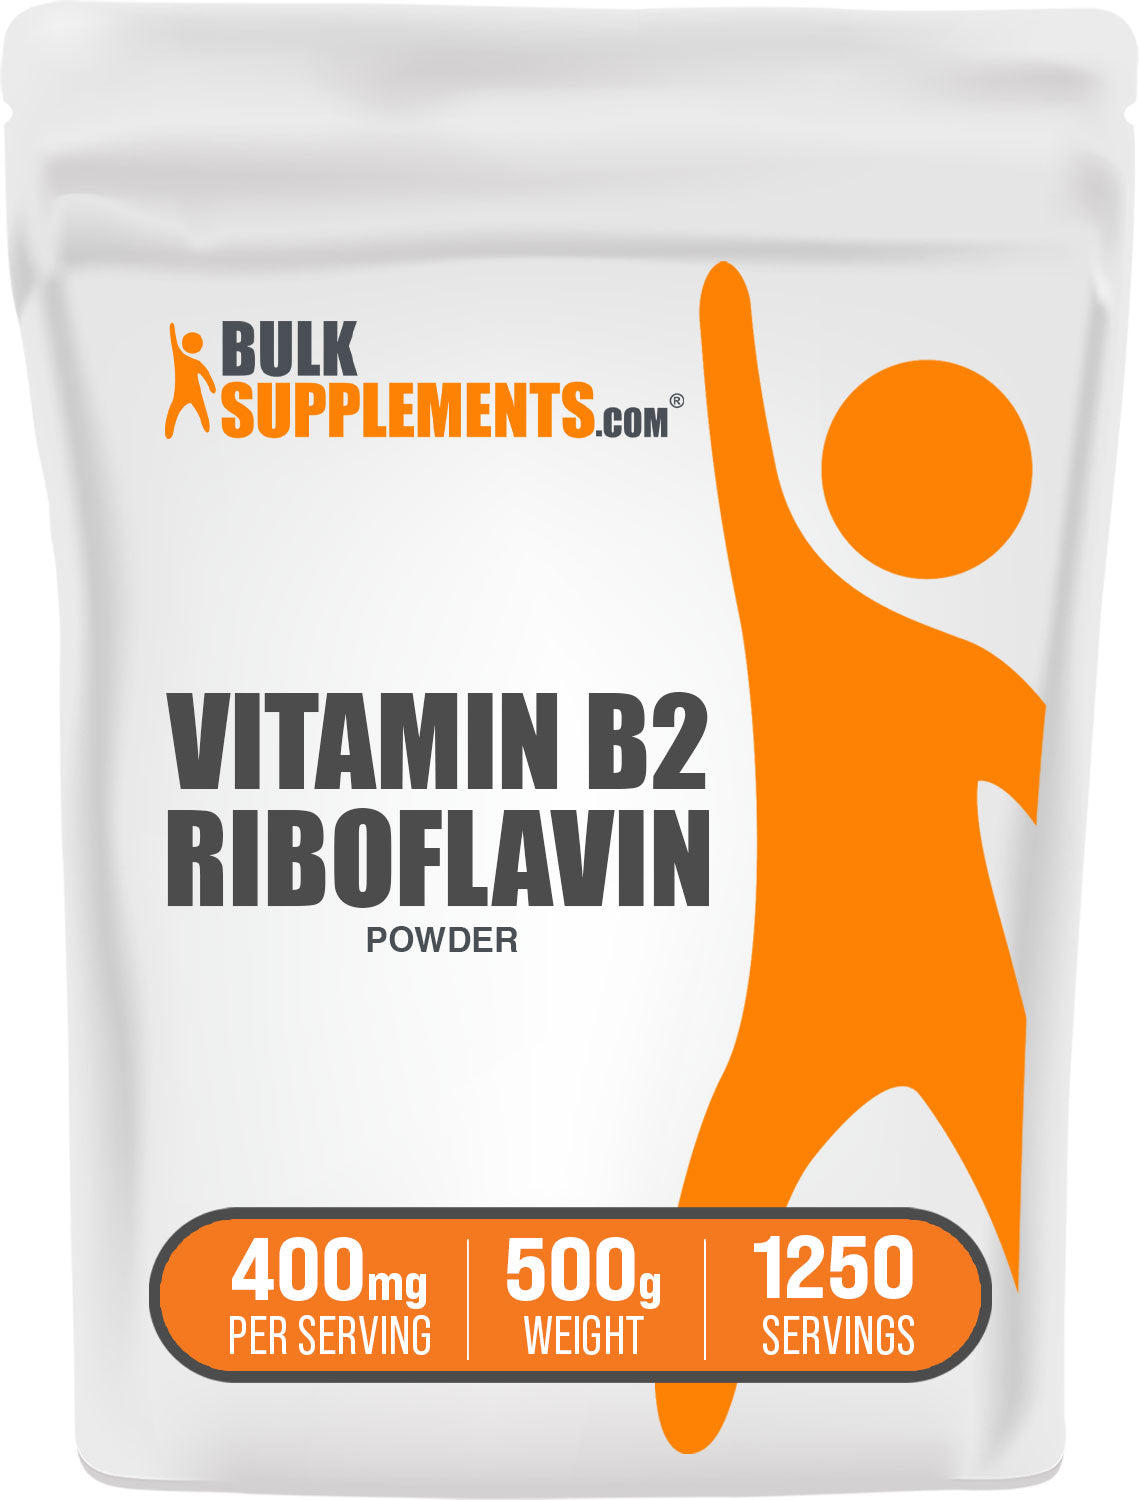 BulkSupplements Vitamin B2 Riboflavin Powder 500g bag